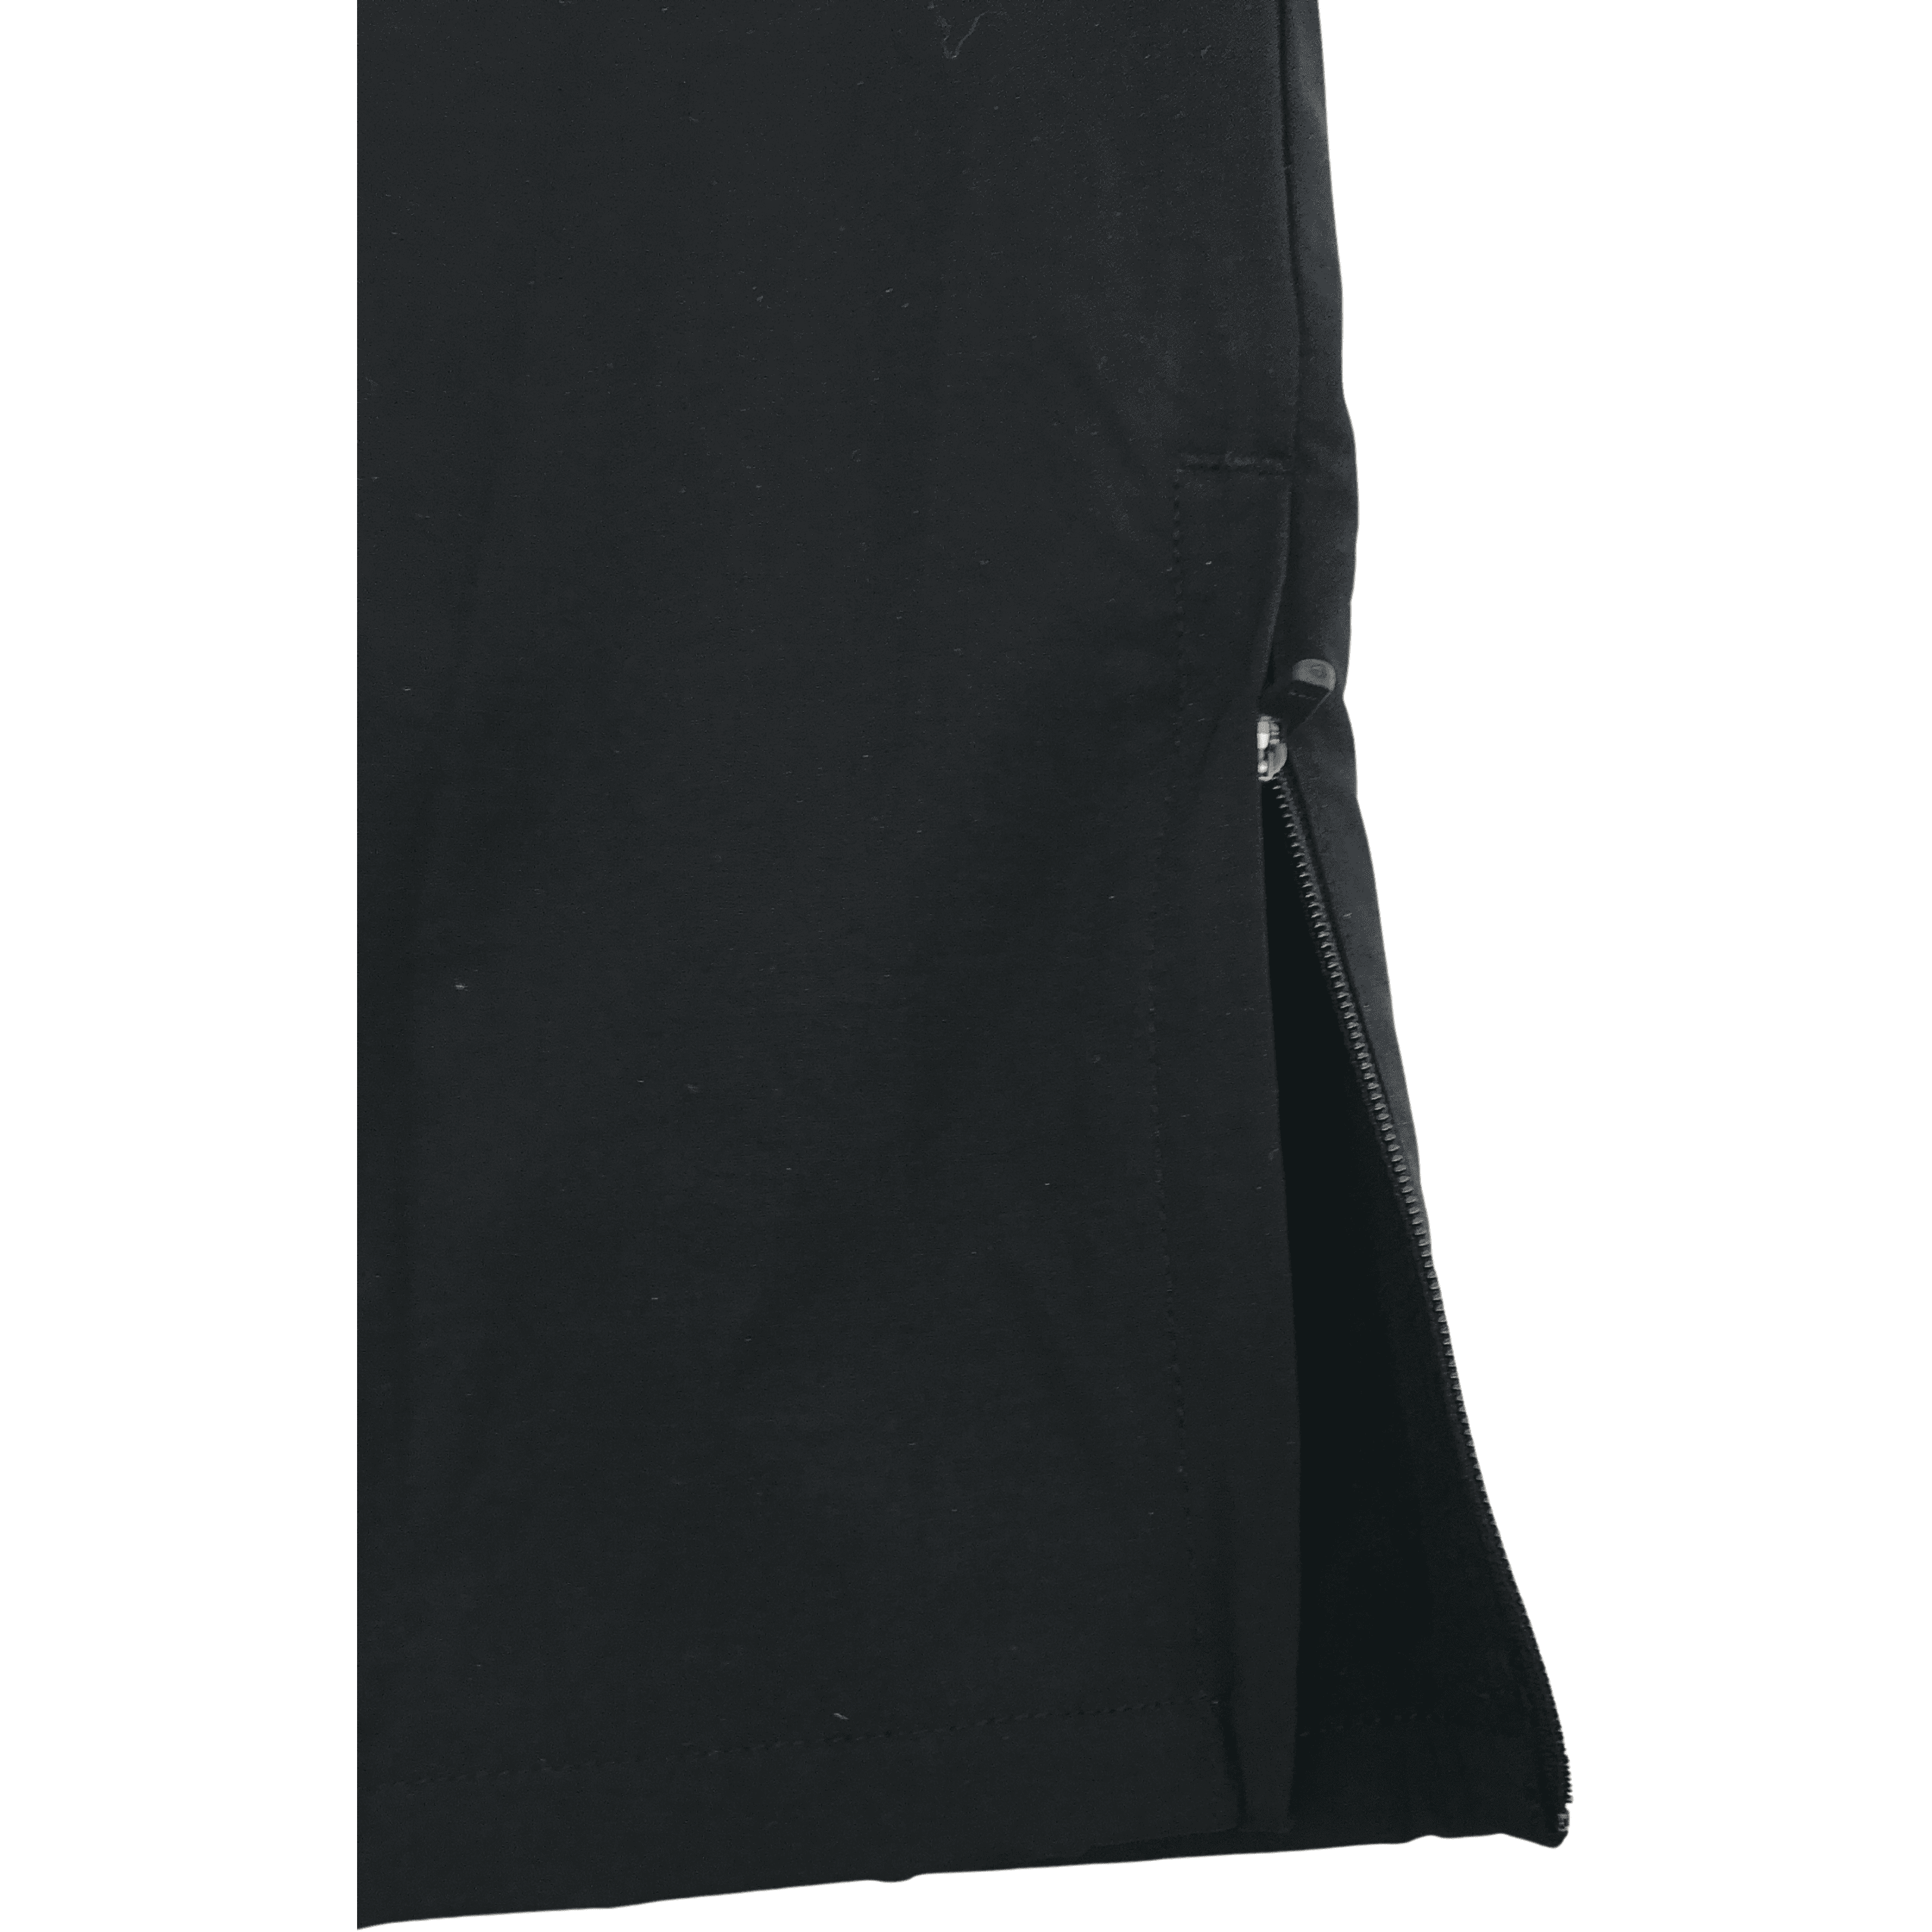 Storm Pack Women's Lined Pants / Waterproof / Black / Windproof / Various Sizes